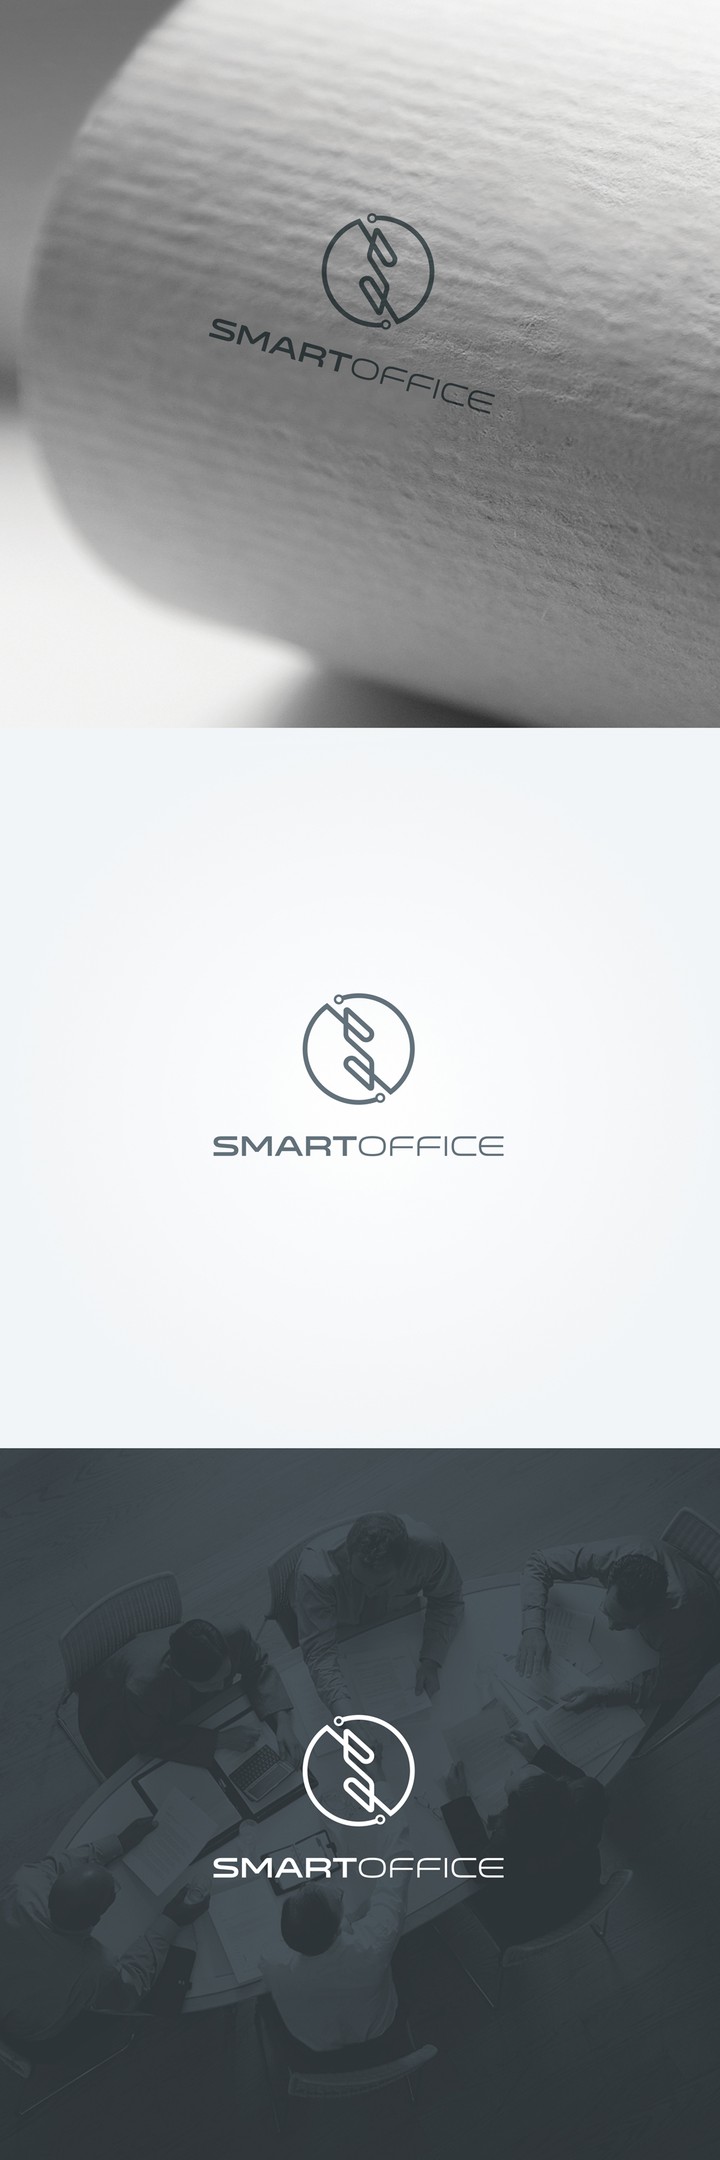 Smart Office logo